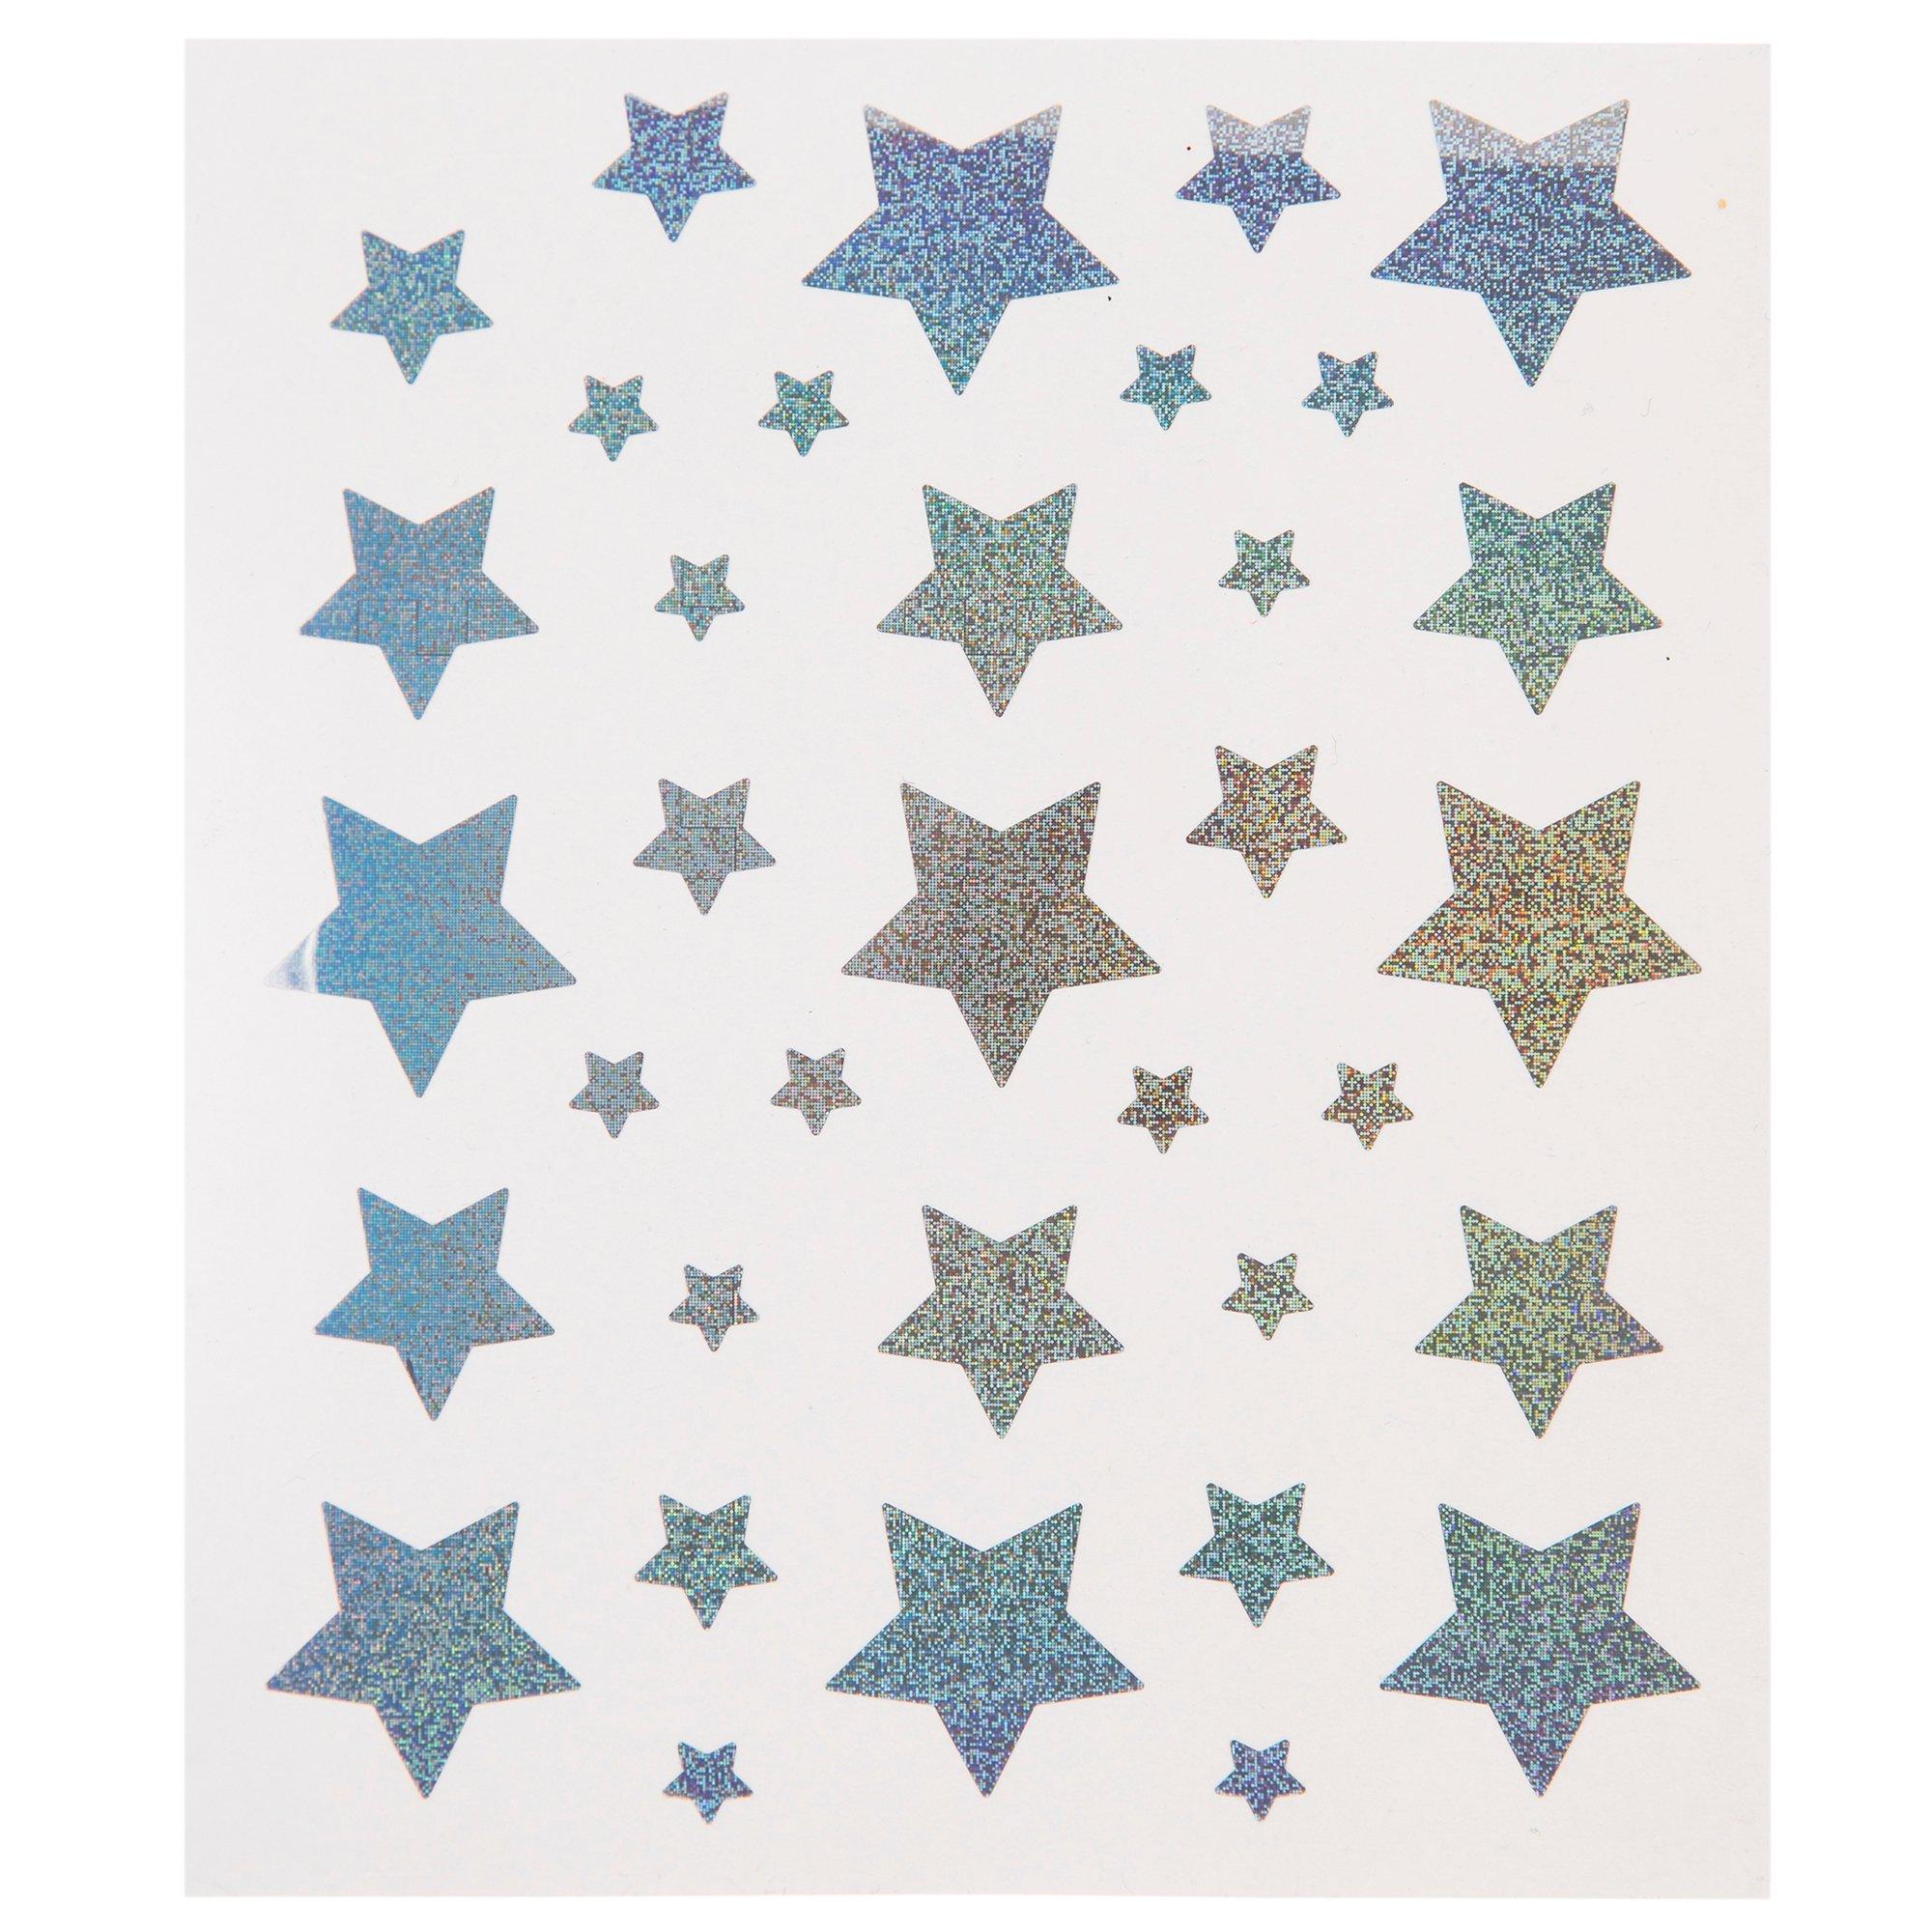 Silver Star Puffy Stickers, Hobby Lobby